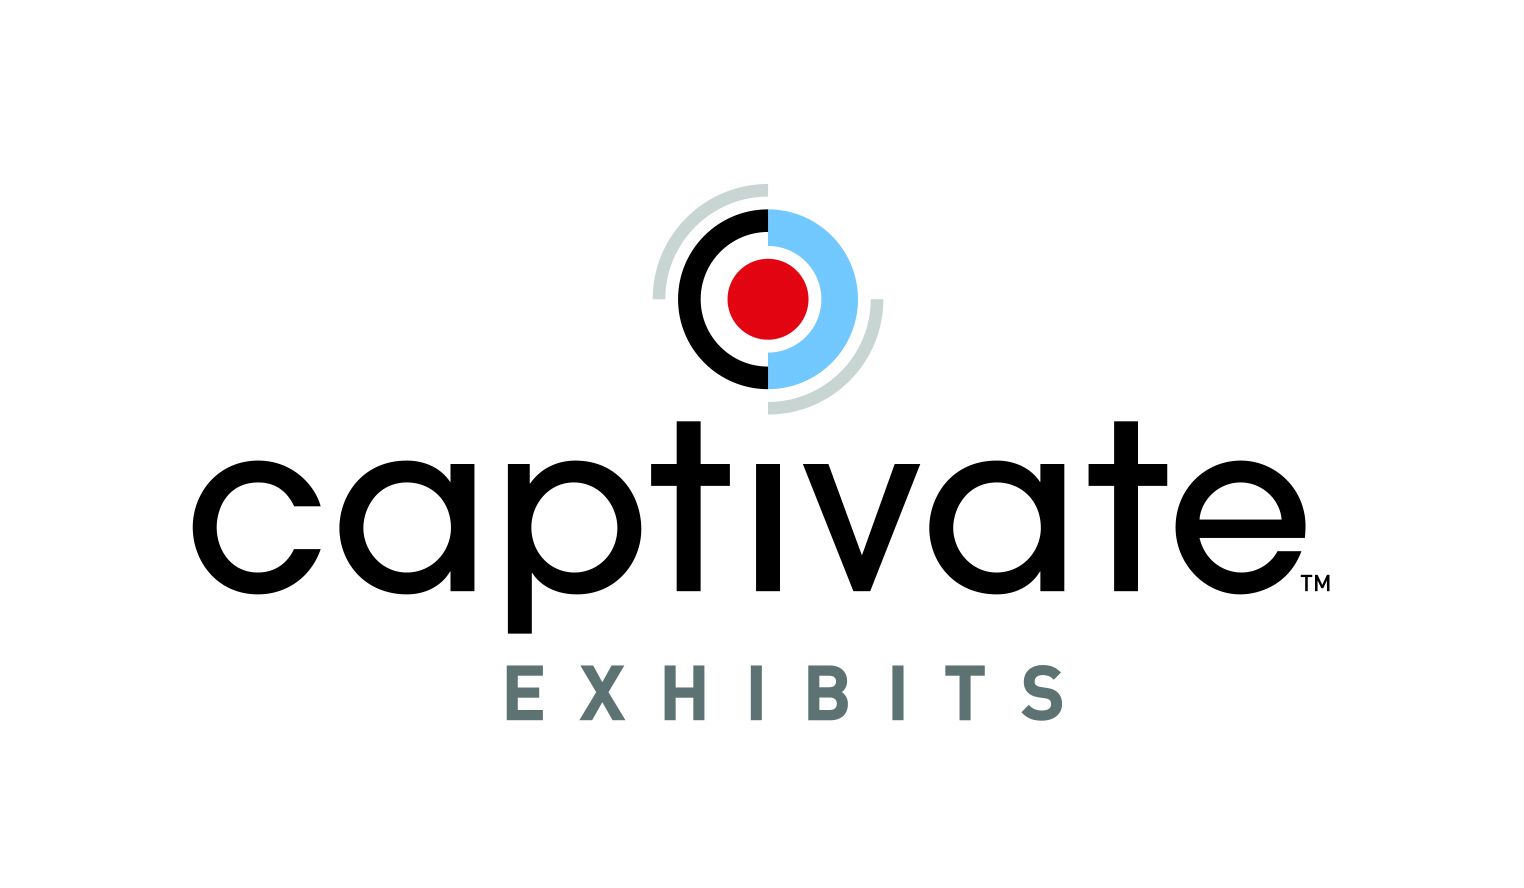 Captivate Exhibits, trade show marketing experts